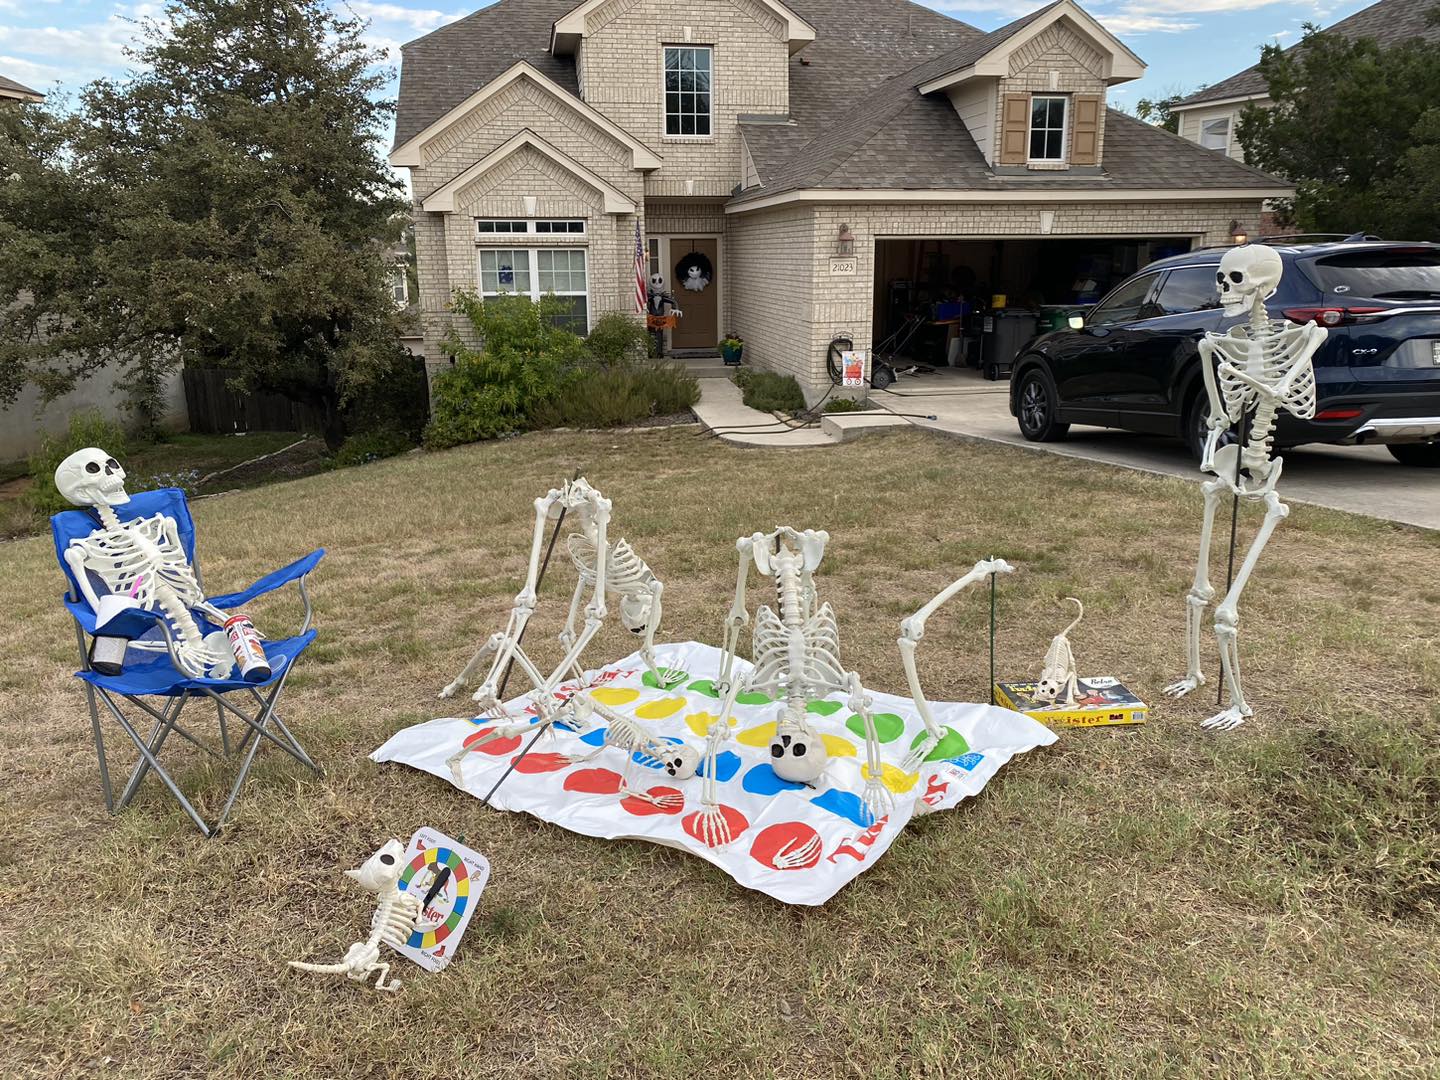 Skeleton House of San Antonio display of skeletons playing Twister